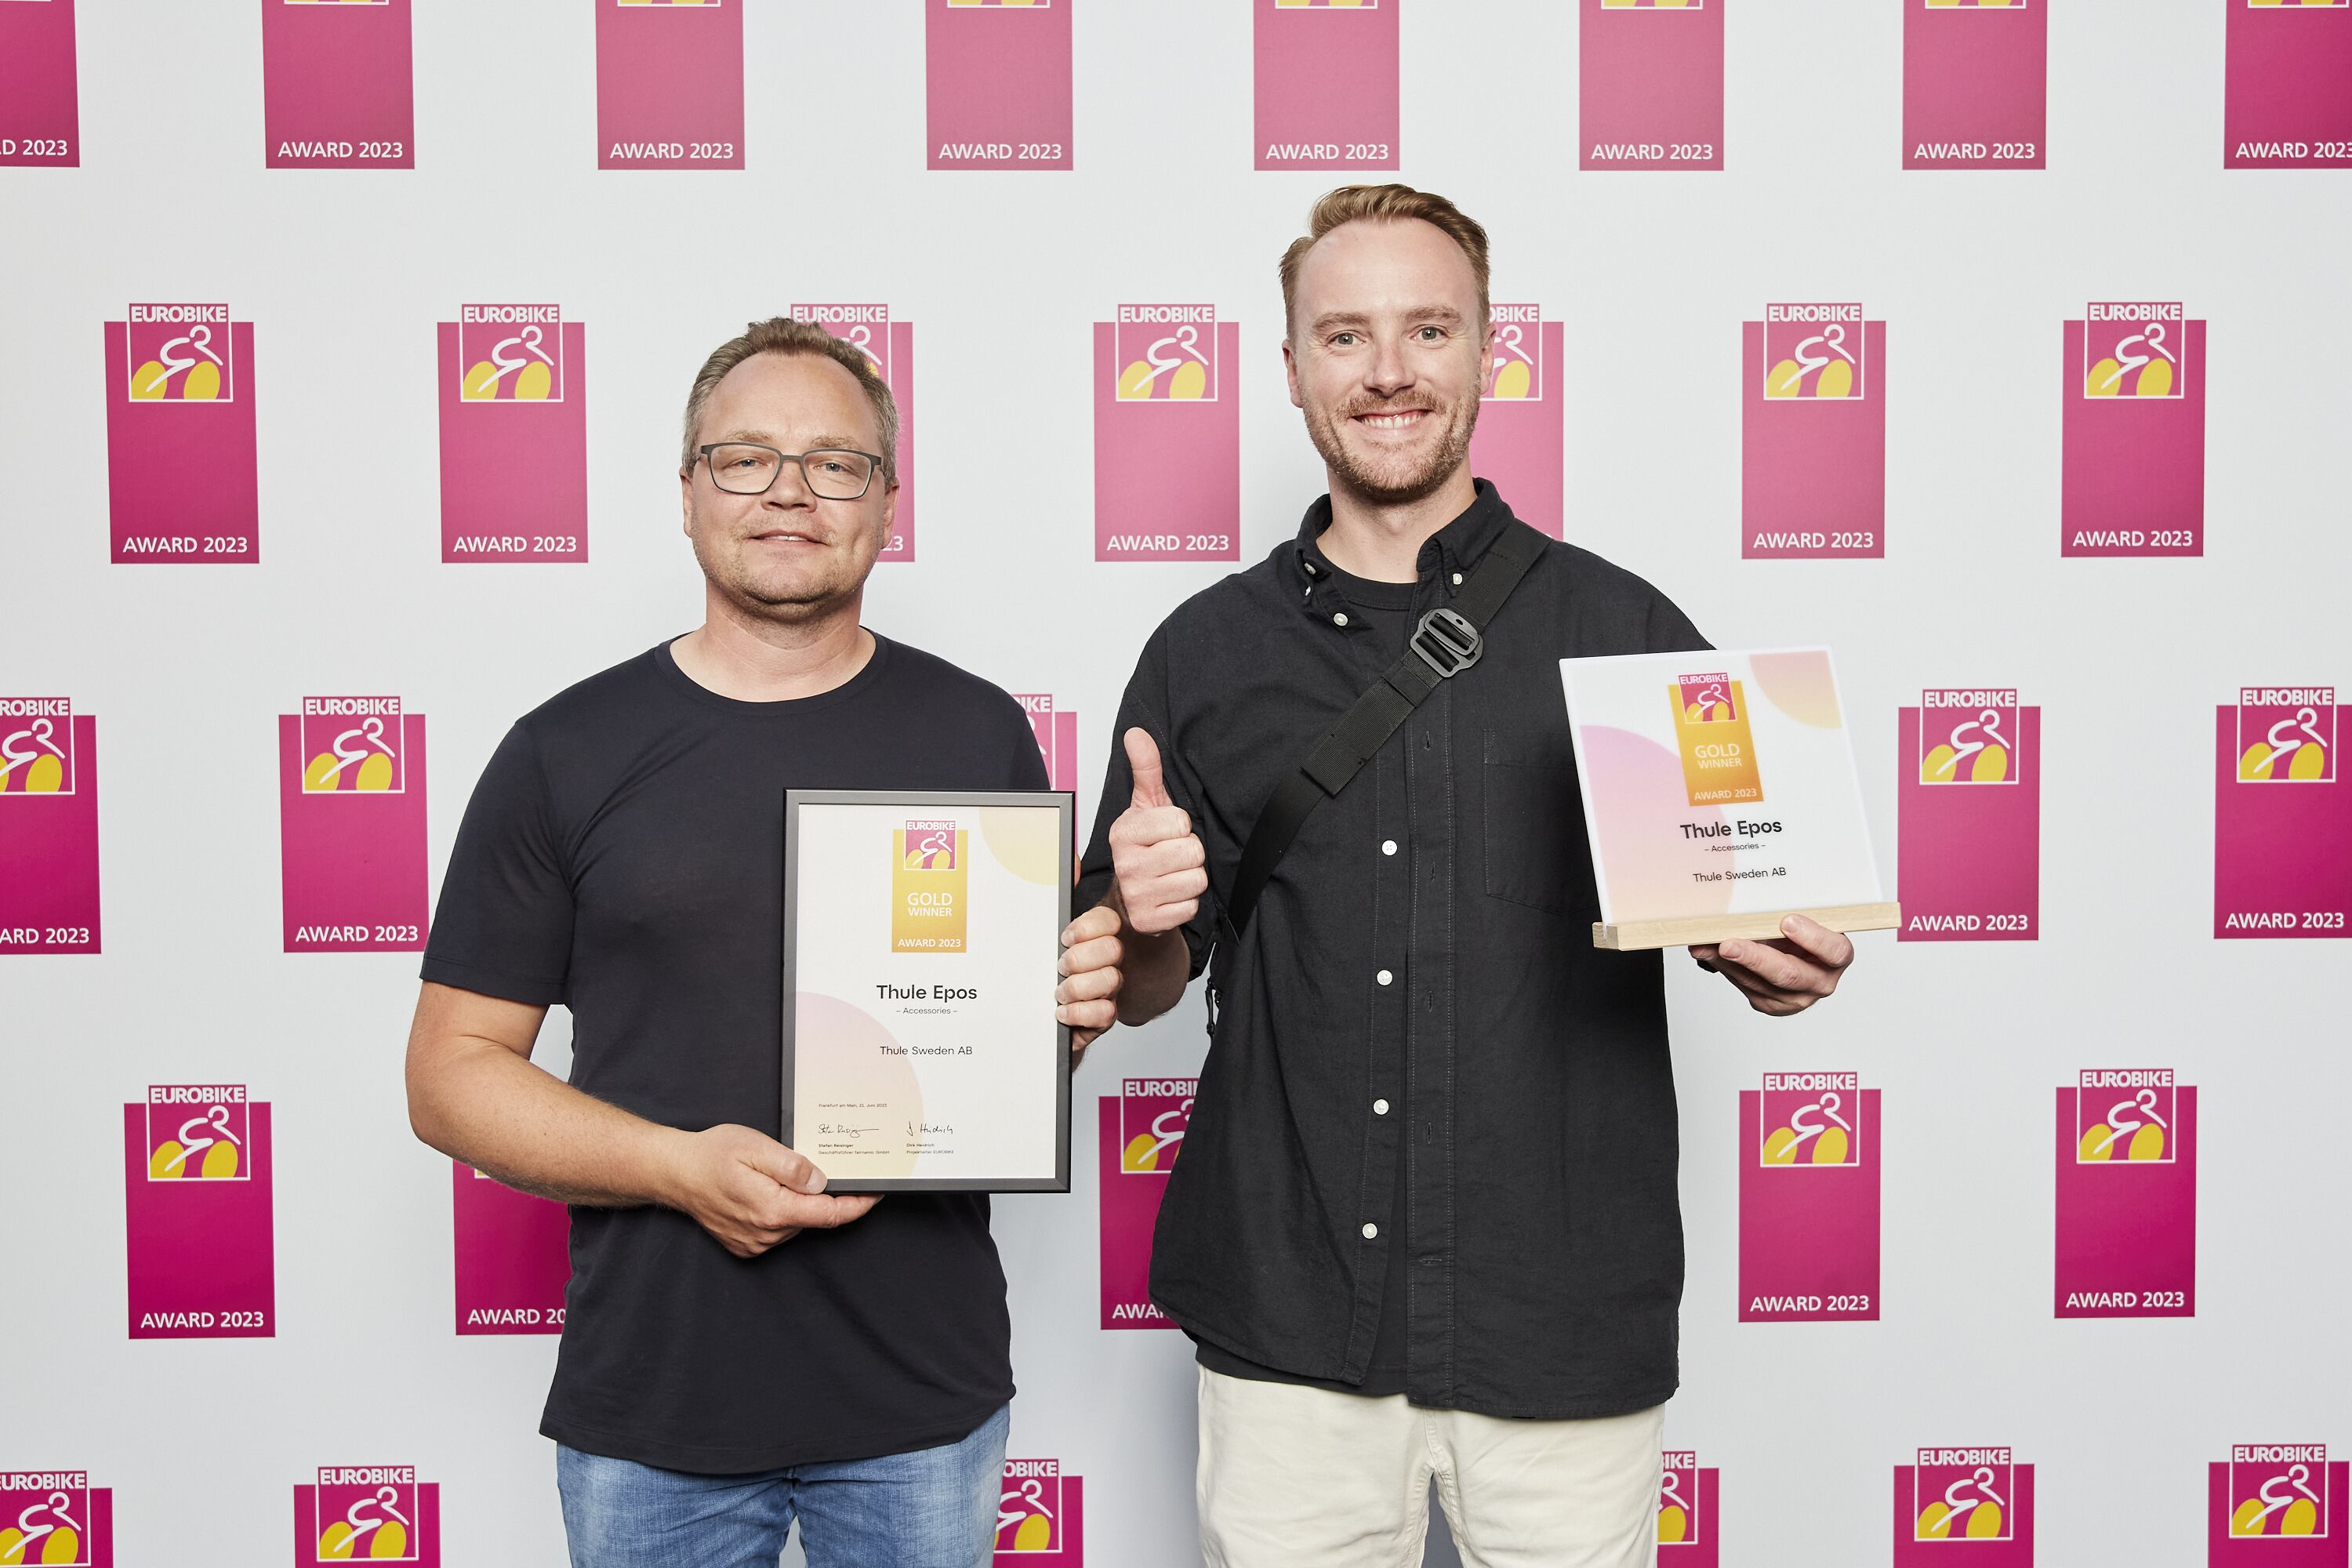 Gewinner Gold Award: Thule Sweden AB; Thule Epos